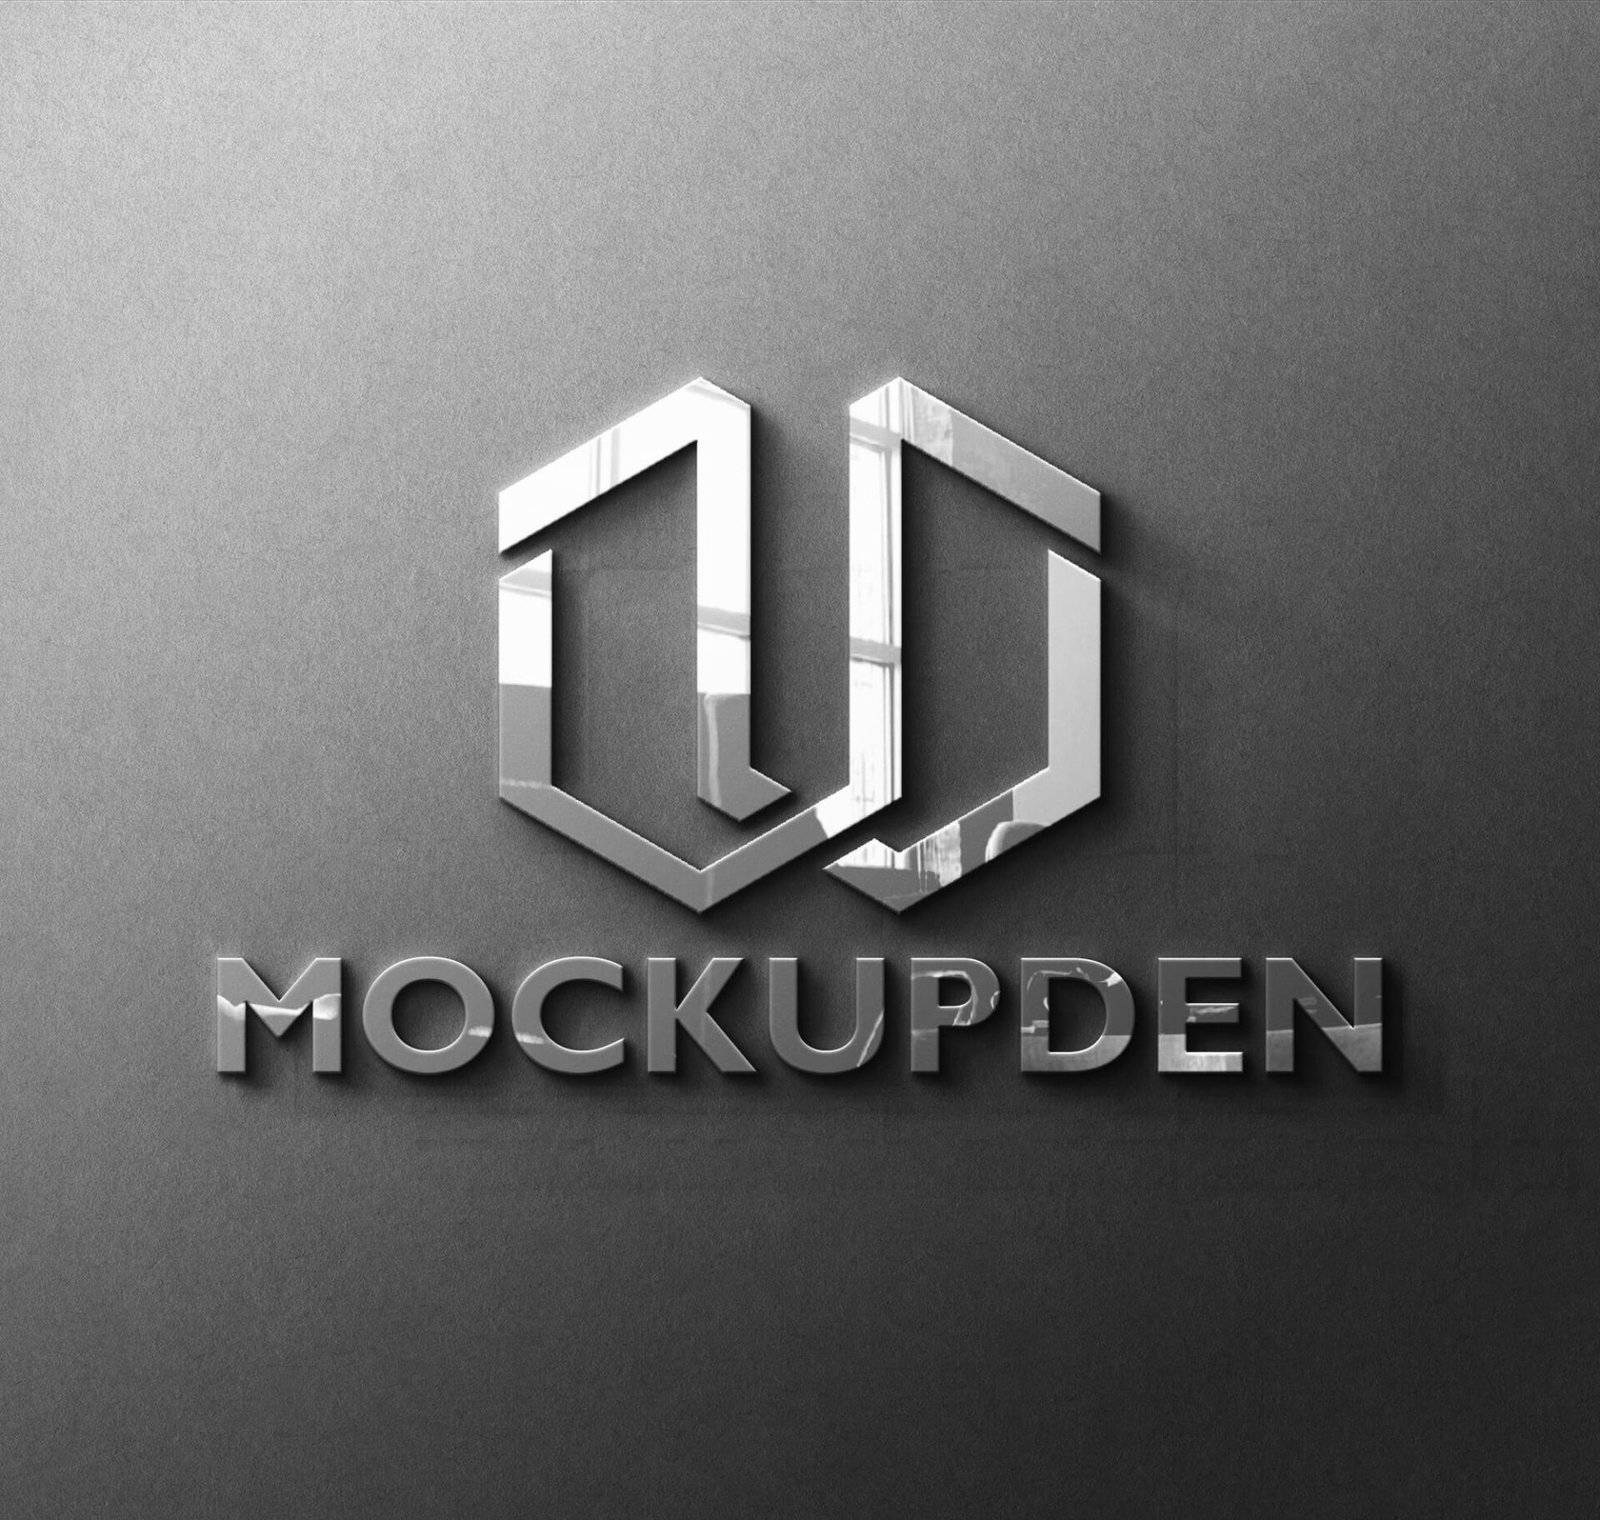 Free Glossy Logo Mockup PSD Template - Mockup